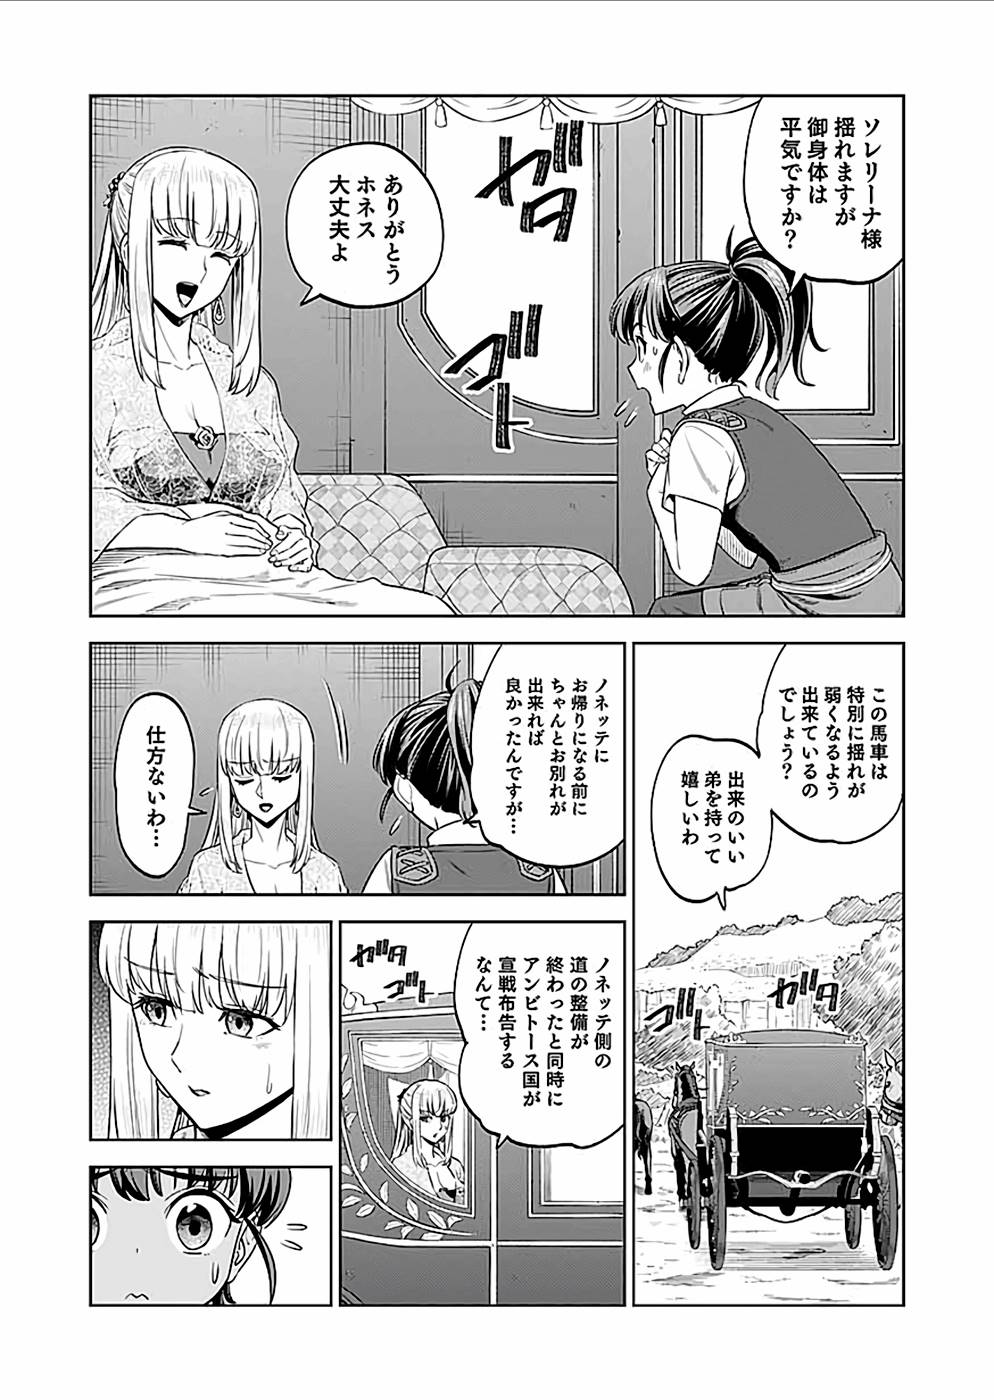 Millimos Saga: Battei Ouji no Tensei Senki - Chapter 23 - Page 2